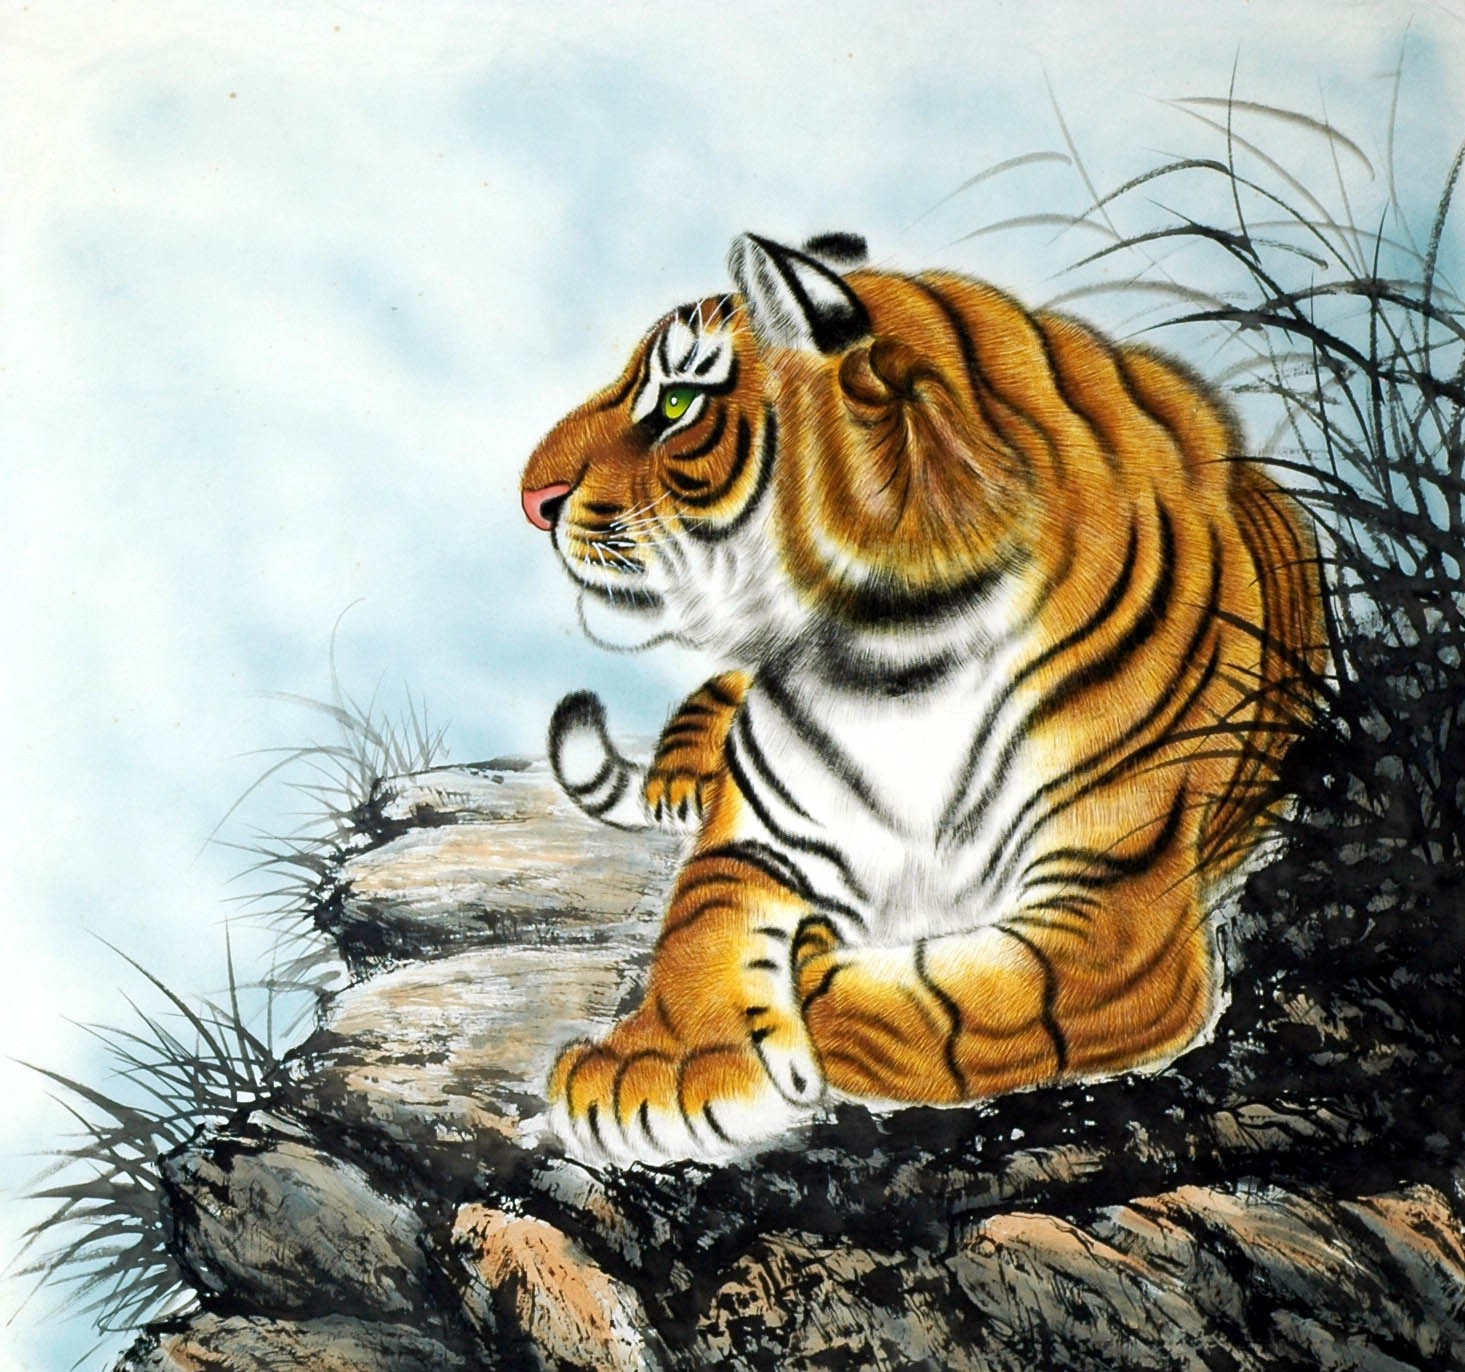 Chinese Tiger Painting - CNAG008518